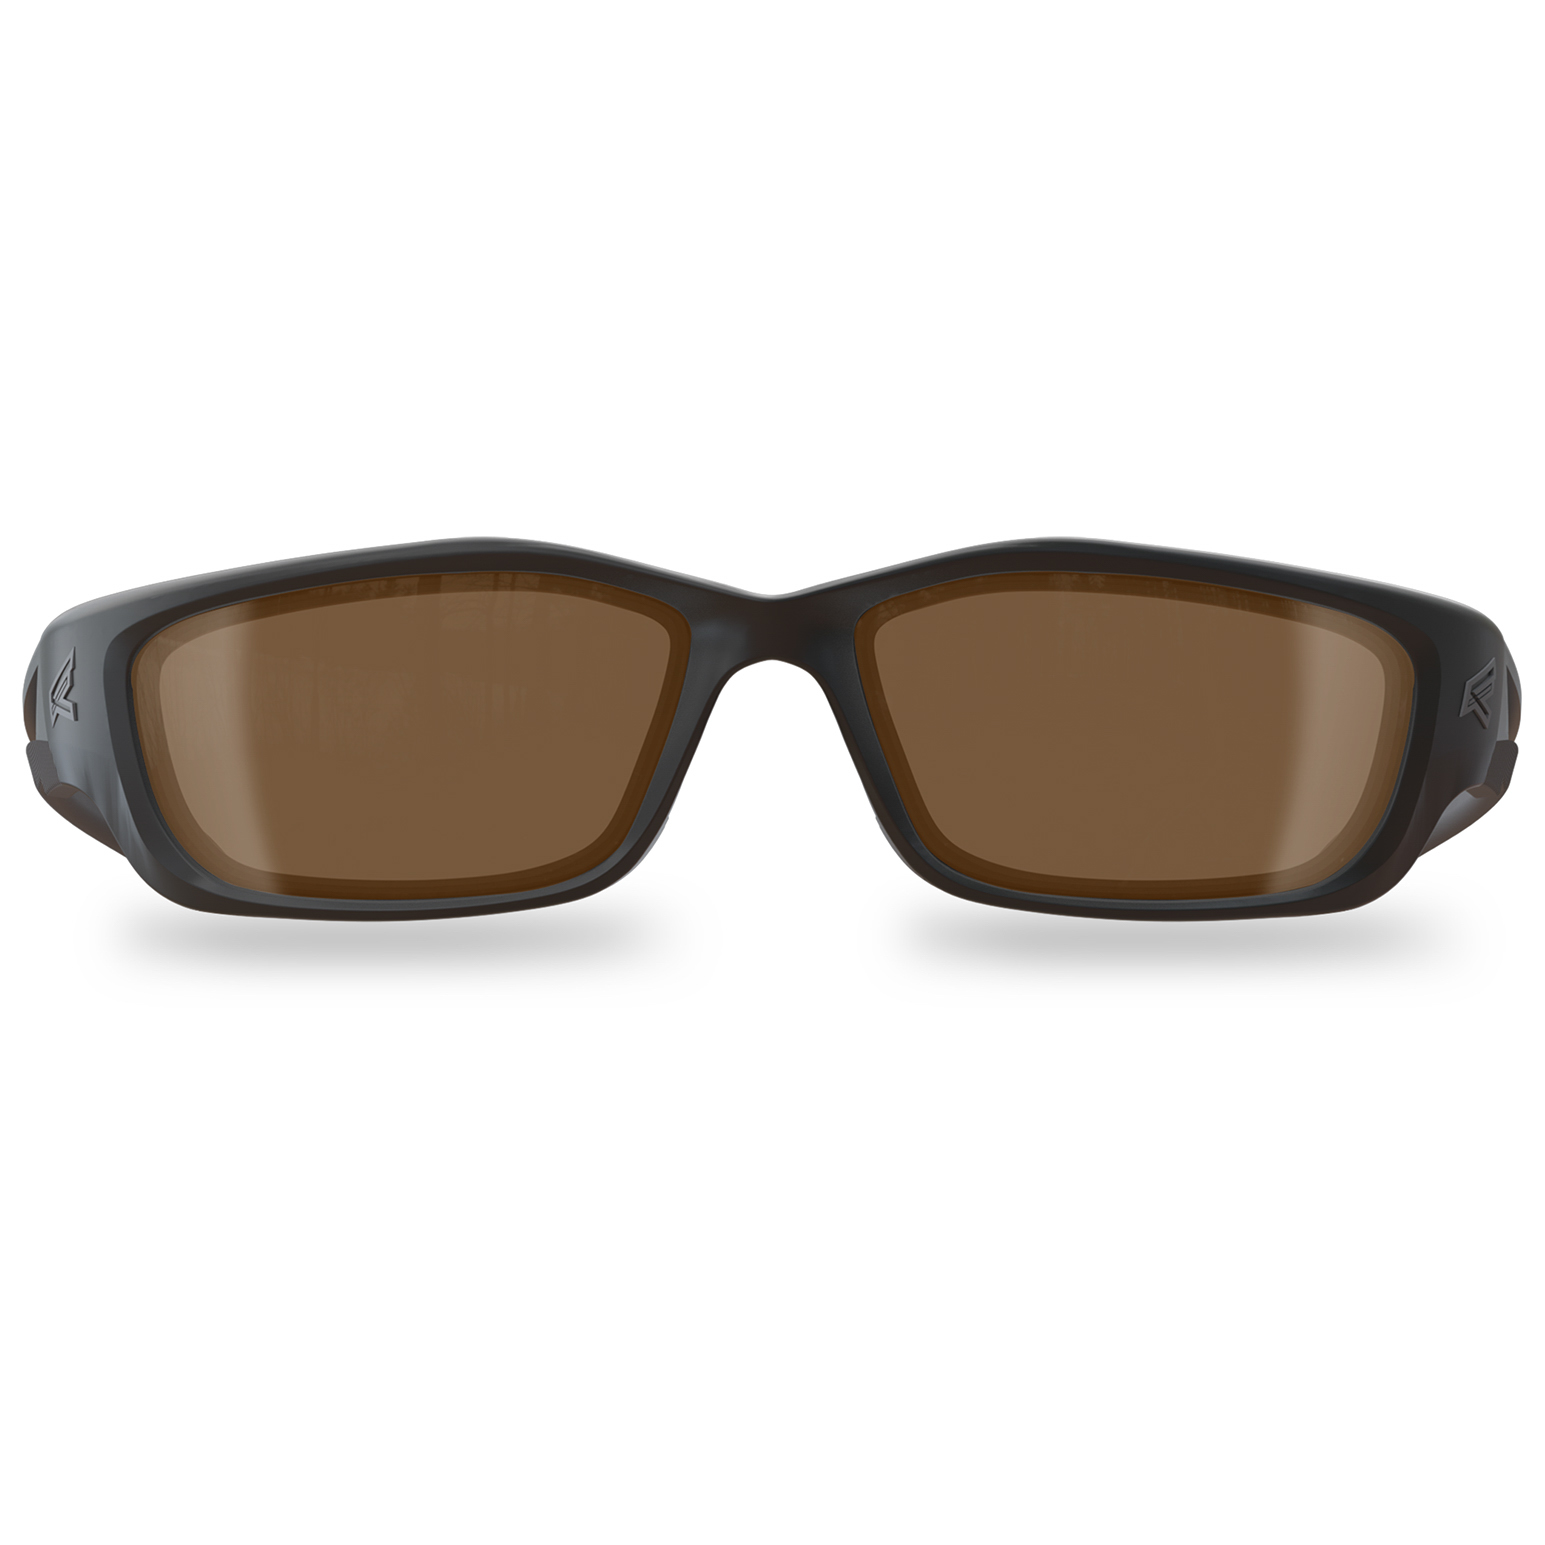 Edge Eyewear® (SK-XL215) Kazbek XL Polarized Safety Glasses, Black Frame,  Copper Driving Lens